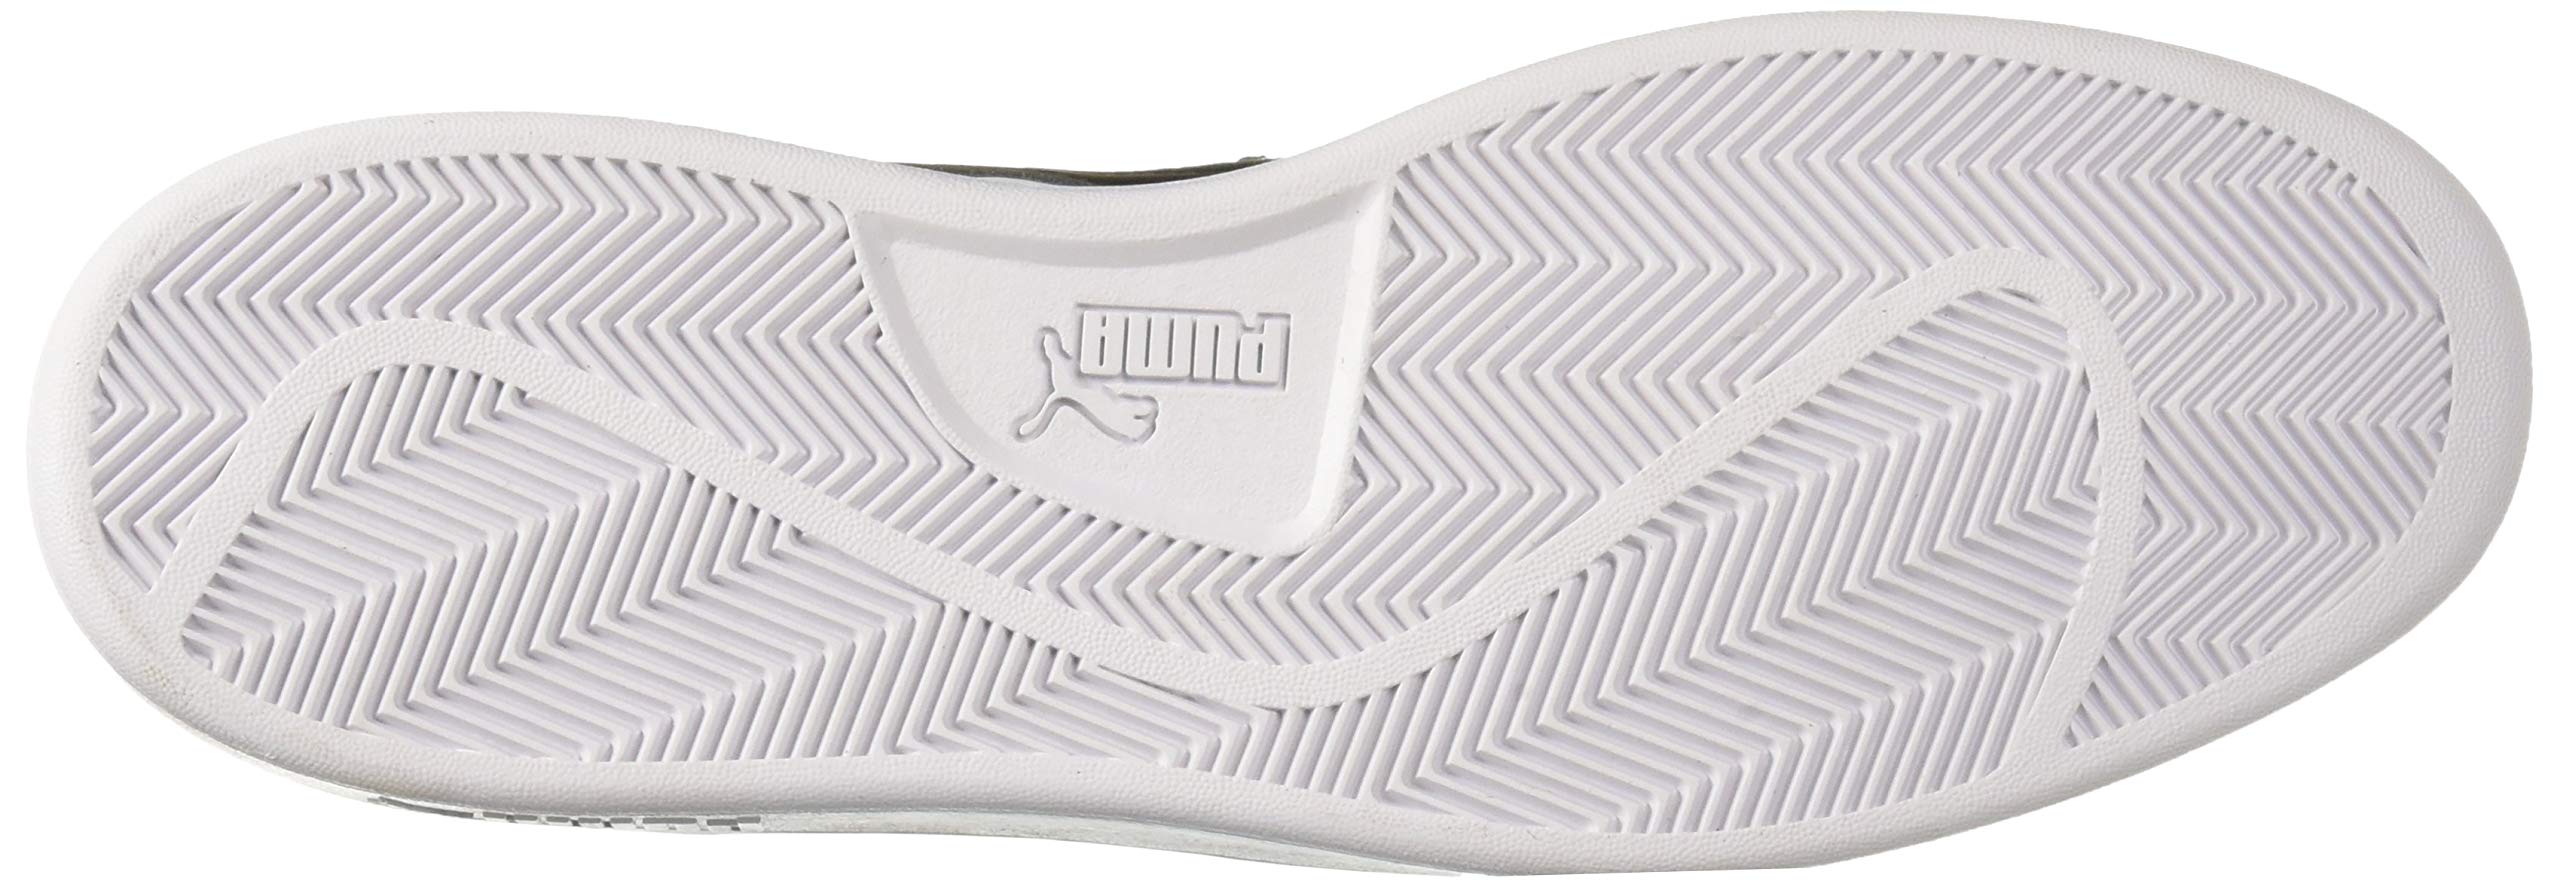 PUMA Men's Smash V2 Casual Sneaker - White or Black Mens Tennis Shoes (White/Black, 8) - image 4 of 8